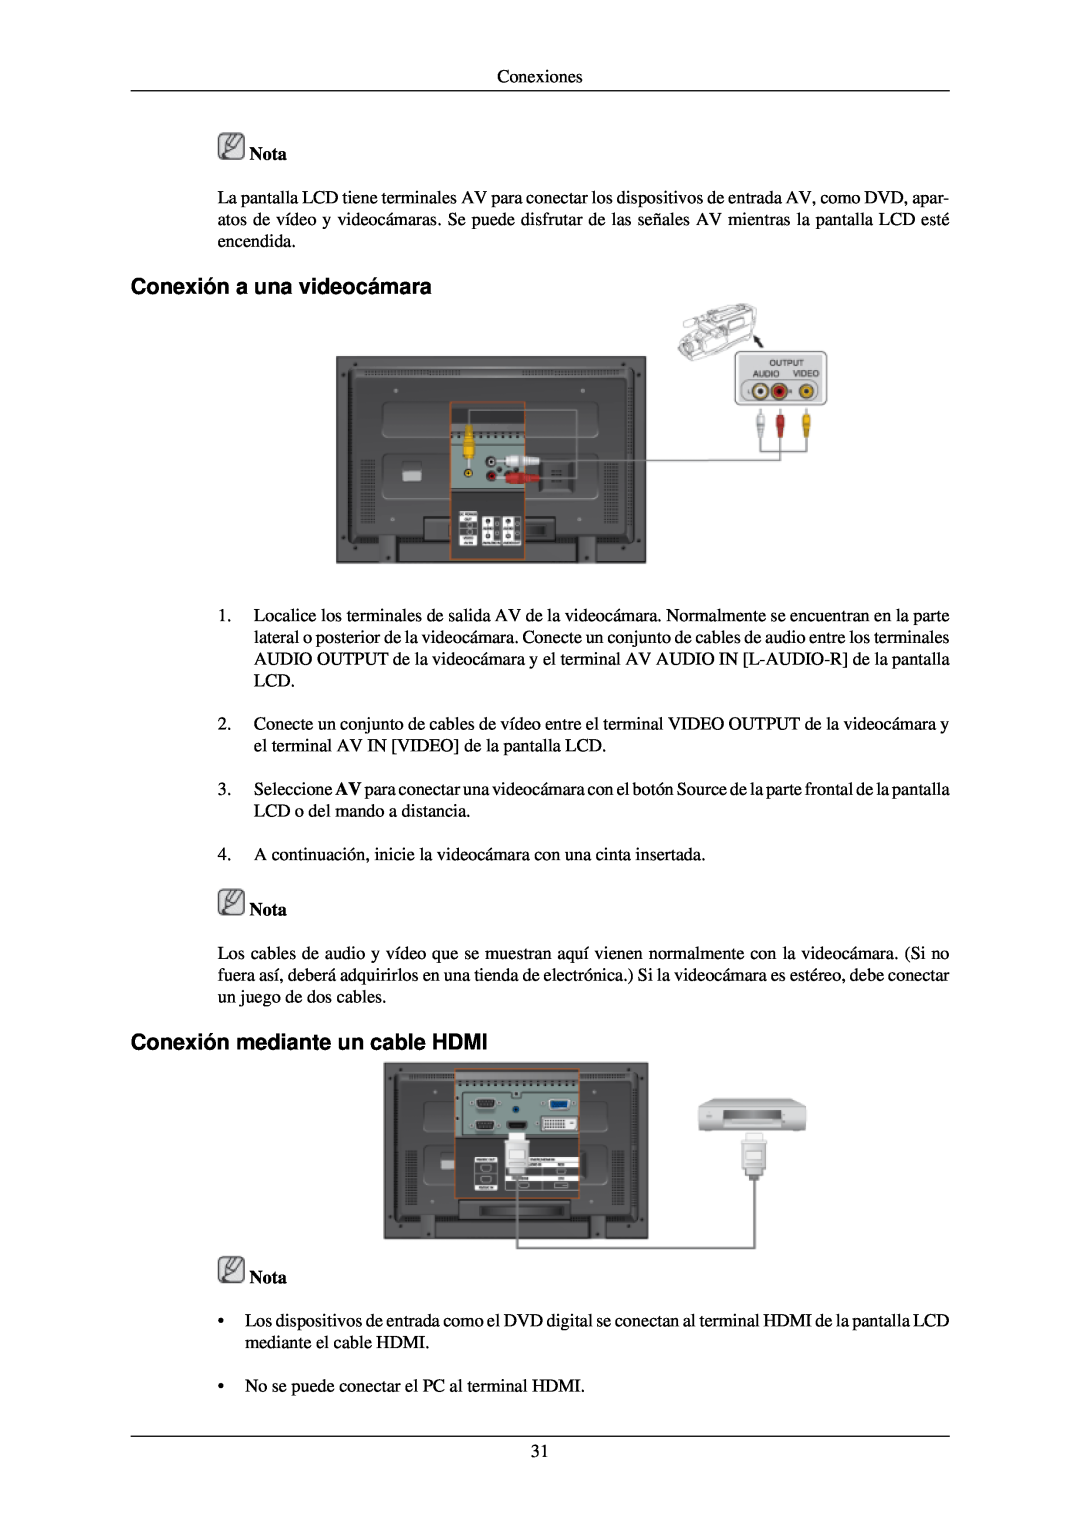 Samsung LH40TCQMBG/EN, LH40TCUMBG/EN, LH46TCUMBC/EN manual Conexión a una videocámara, Conexión mediante un cable HDMI, Nota 